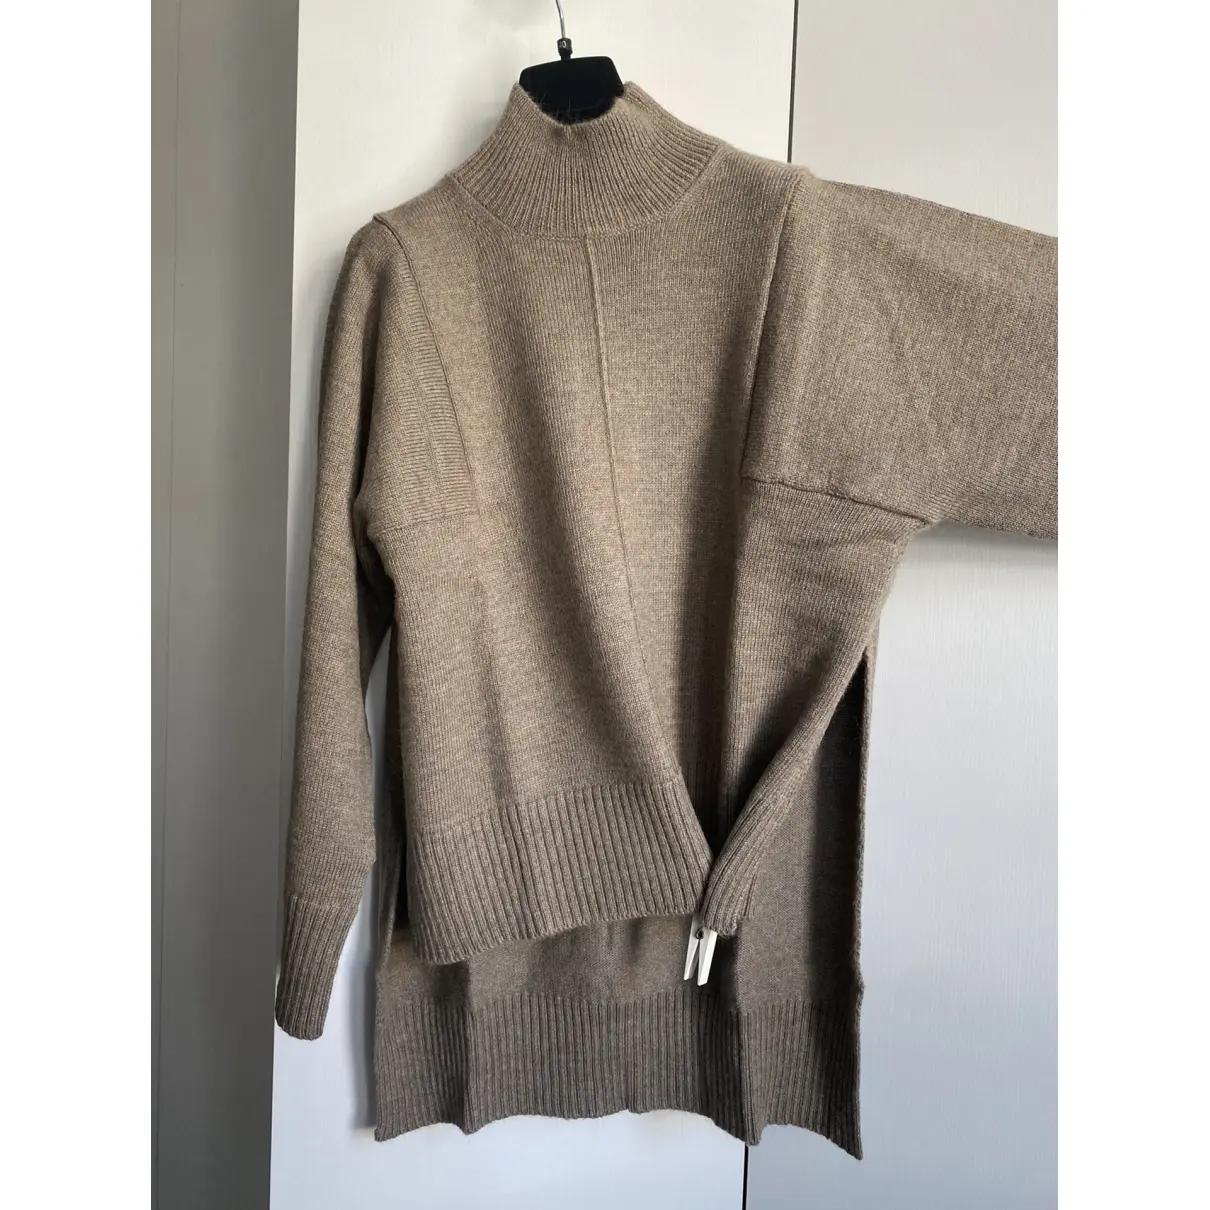 Buy Erika Cavallini Wool jumper online